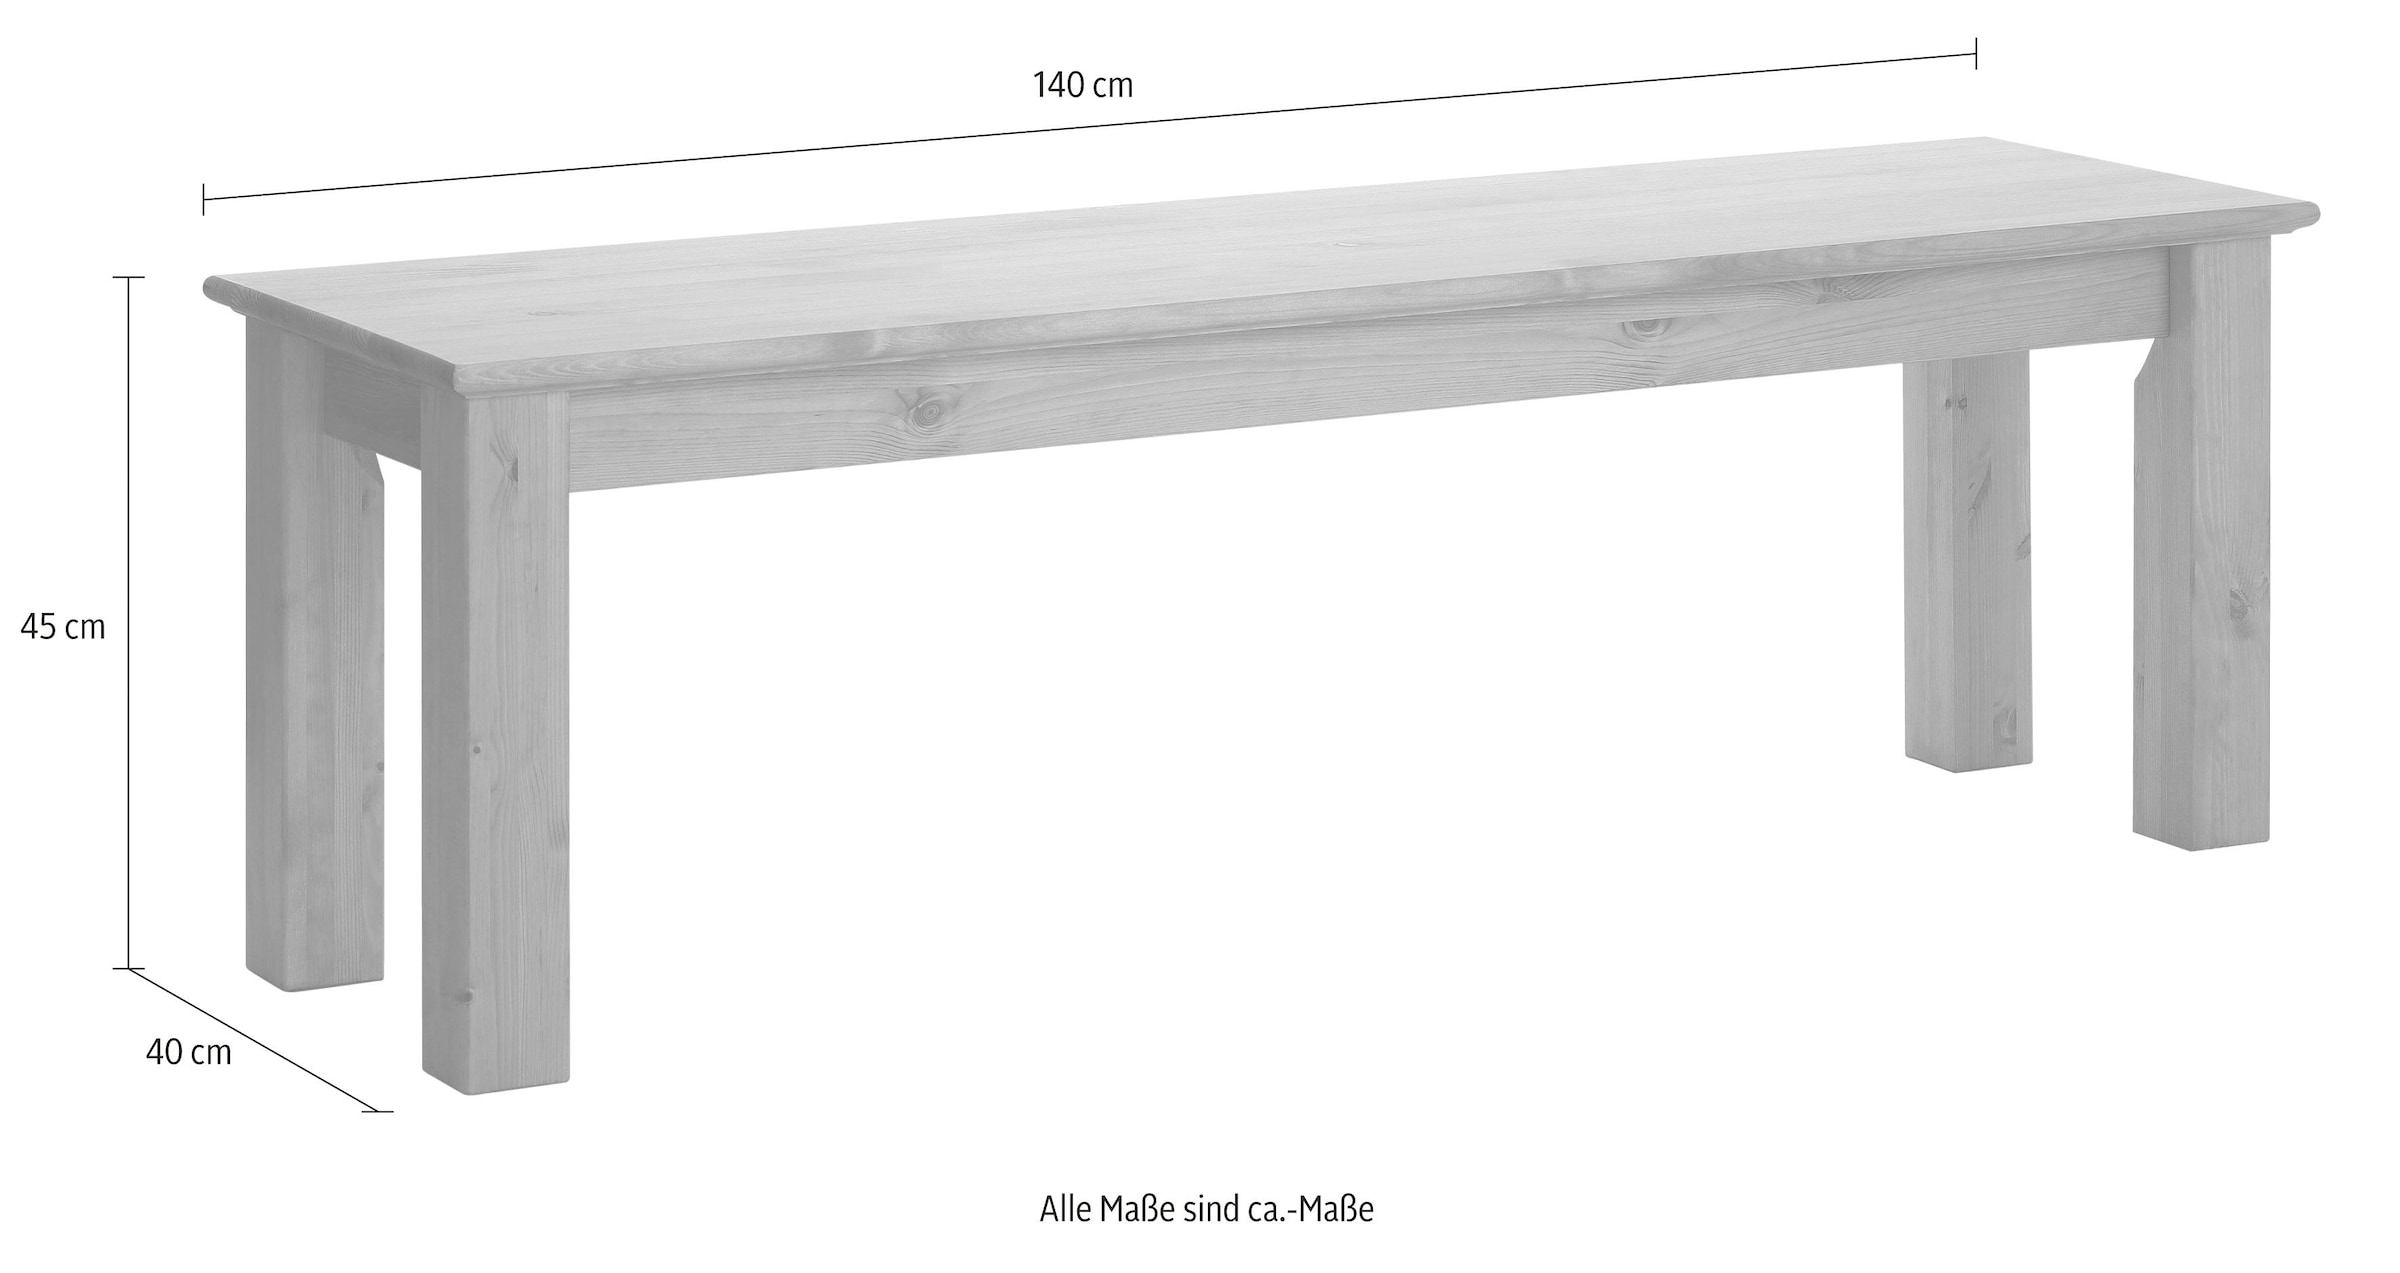 Home affaire Sitzbank, Breite 120 cm, aus massiver, FSC-zertifizierter Kiefer